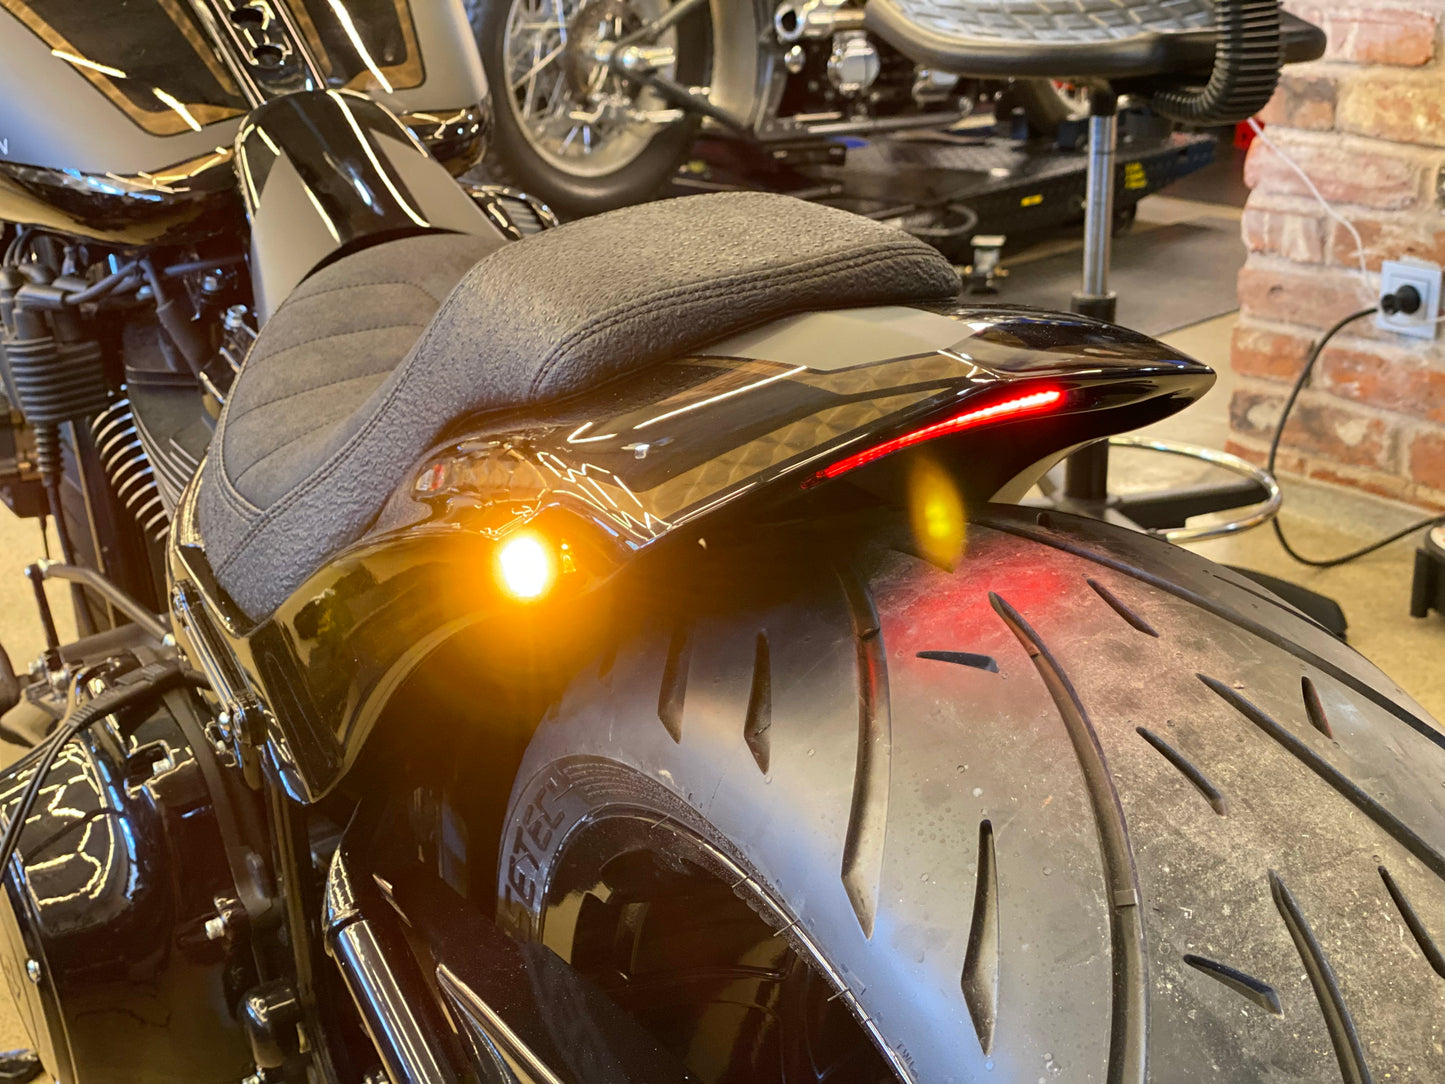 Zoomed Harley Davidson motorcycle with Killer Custom "Avenger" rear fender kit from the rear in a bike shop